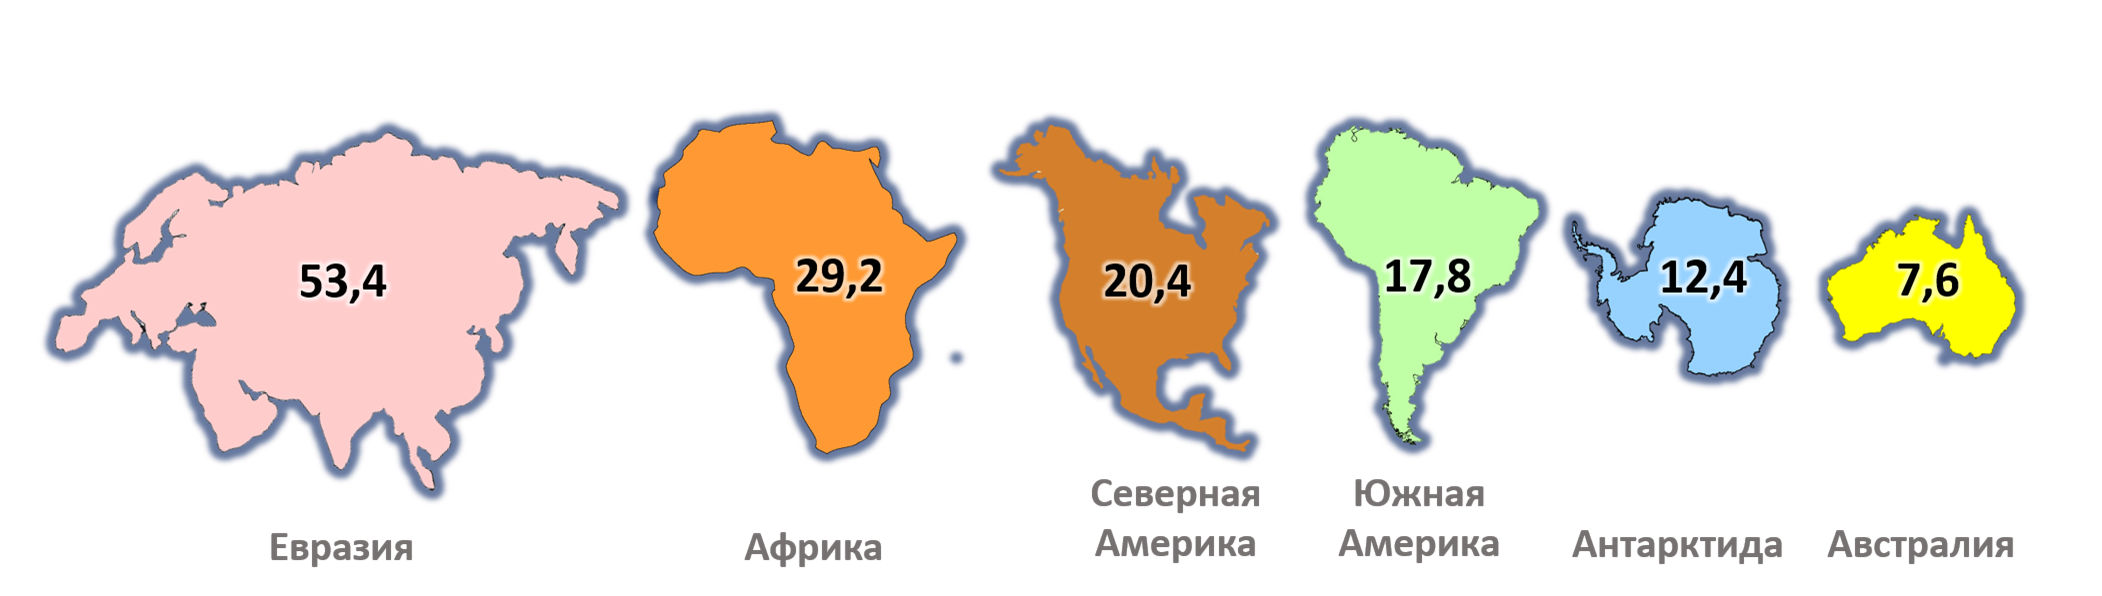 Южная америка по величине. Евразия Африка Северная Америка Южная Америка Австралия Антарктида. Сравнение размеров материков на карте. Размеры материков по площади.